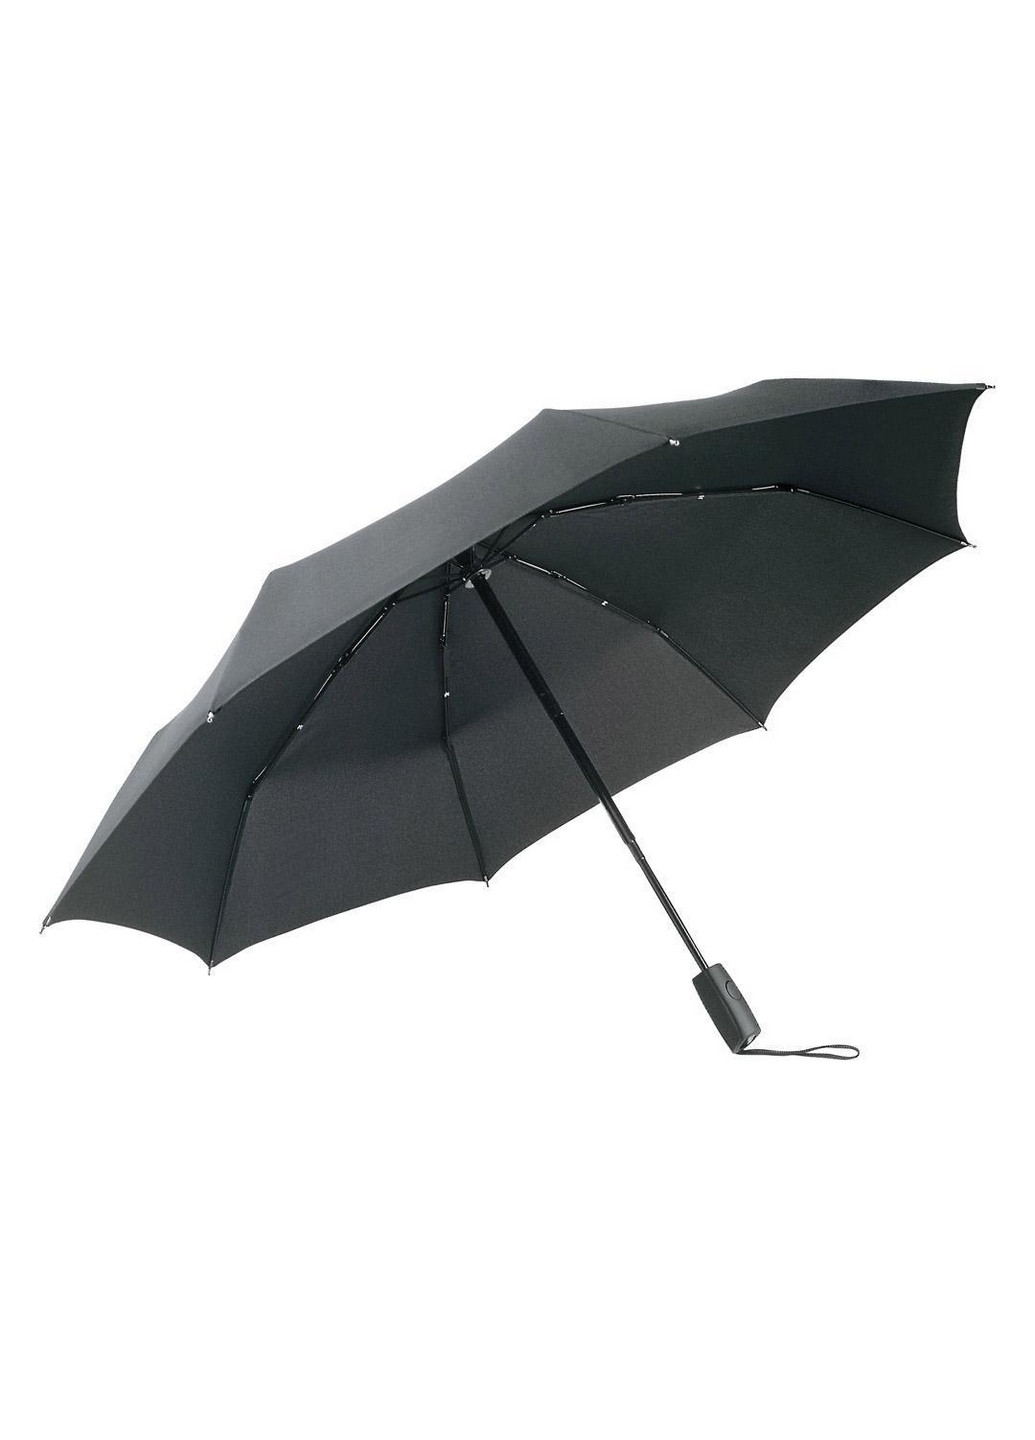 Мужской складной зонт автомат 123 см FARE (260329704)